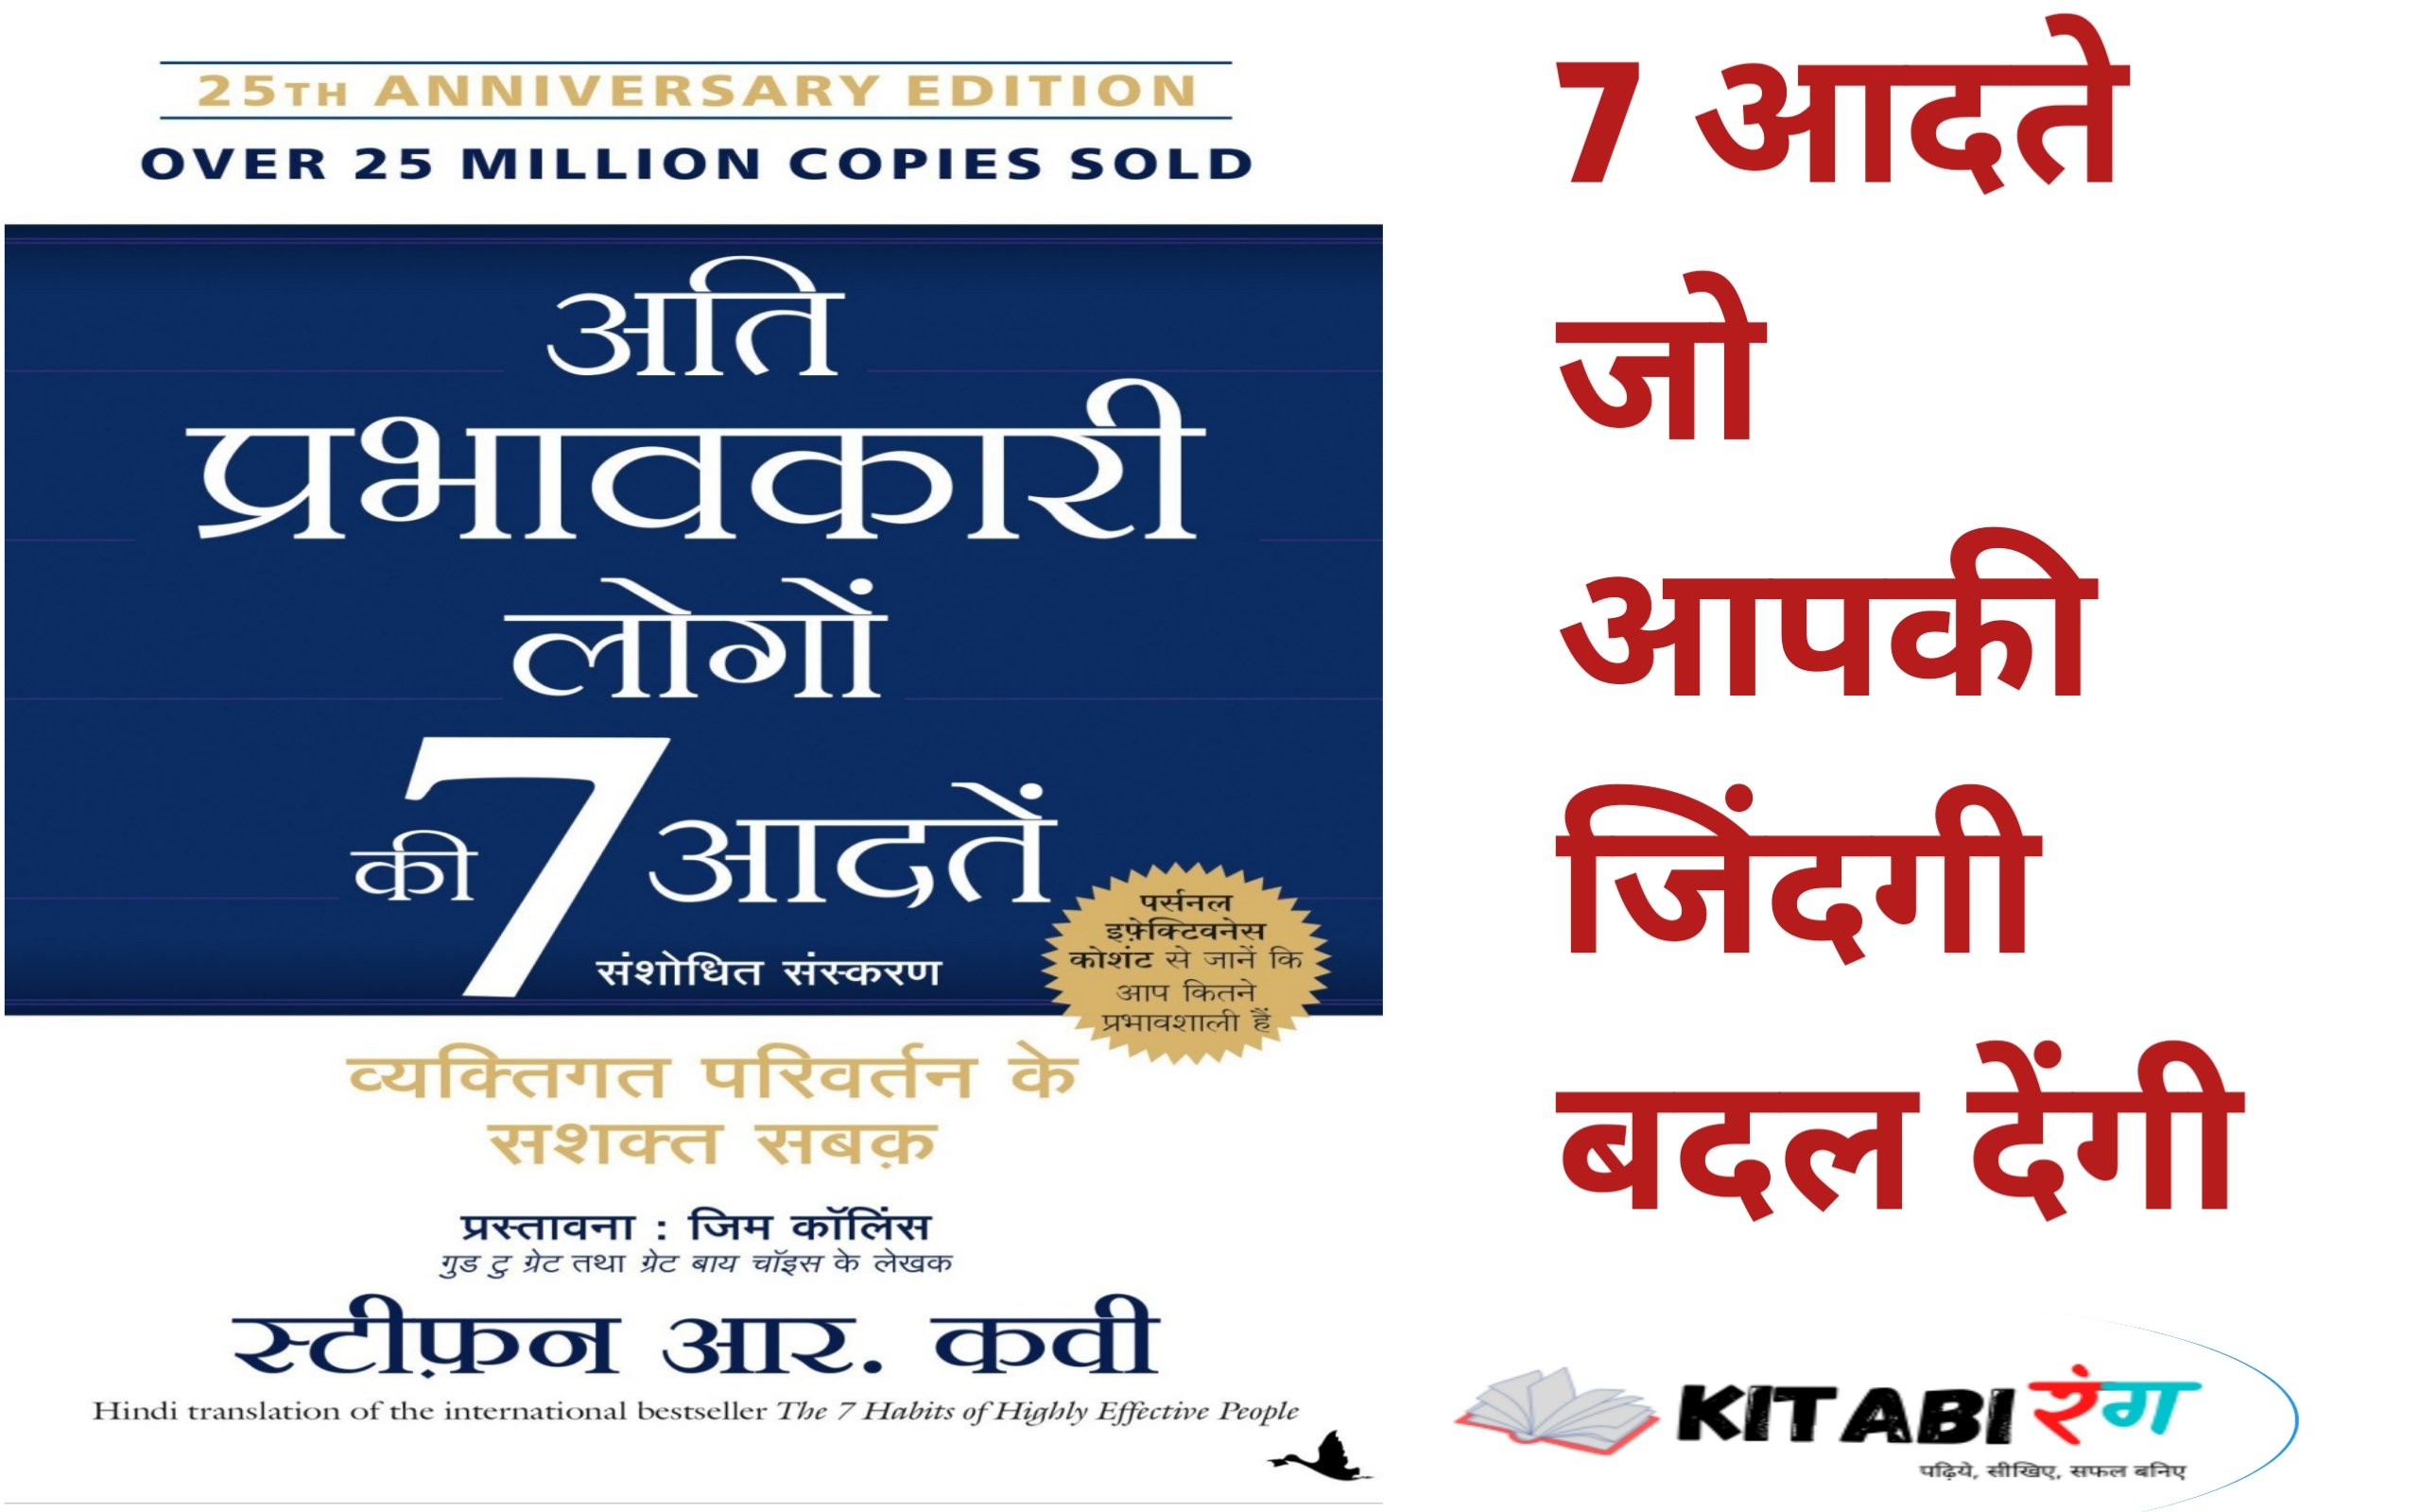 7 habits of highly effective people In Hindi Book Summary|7 आदते जो आपकी जिंदगी बदल देंगी

